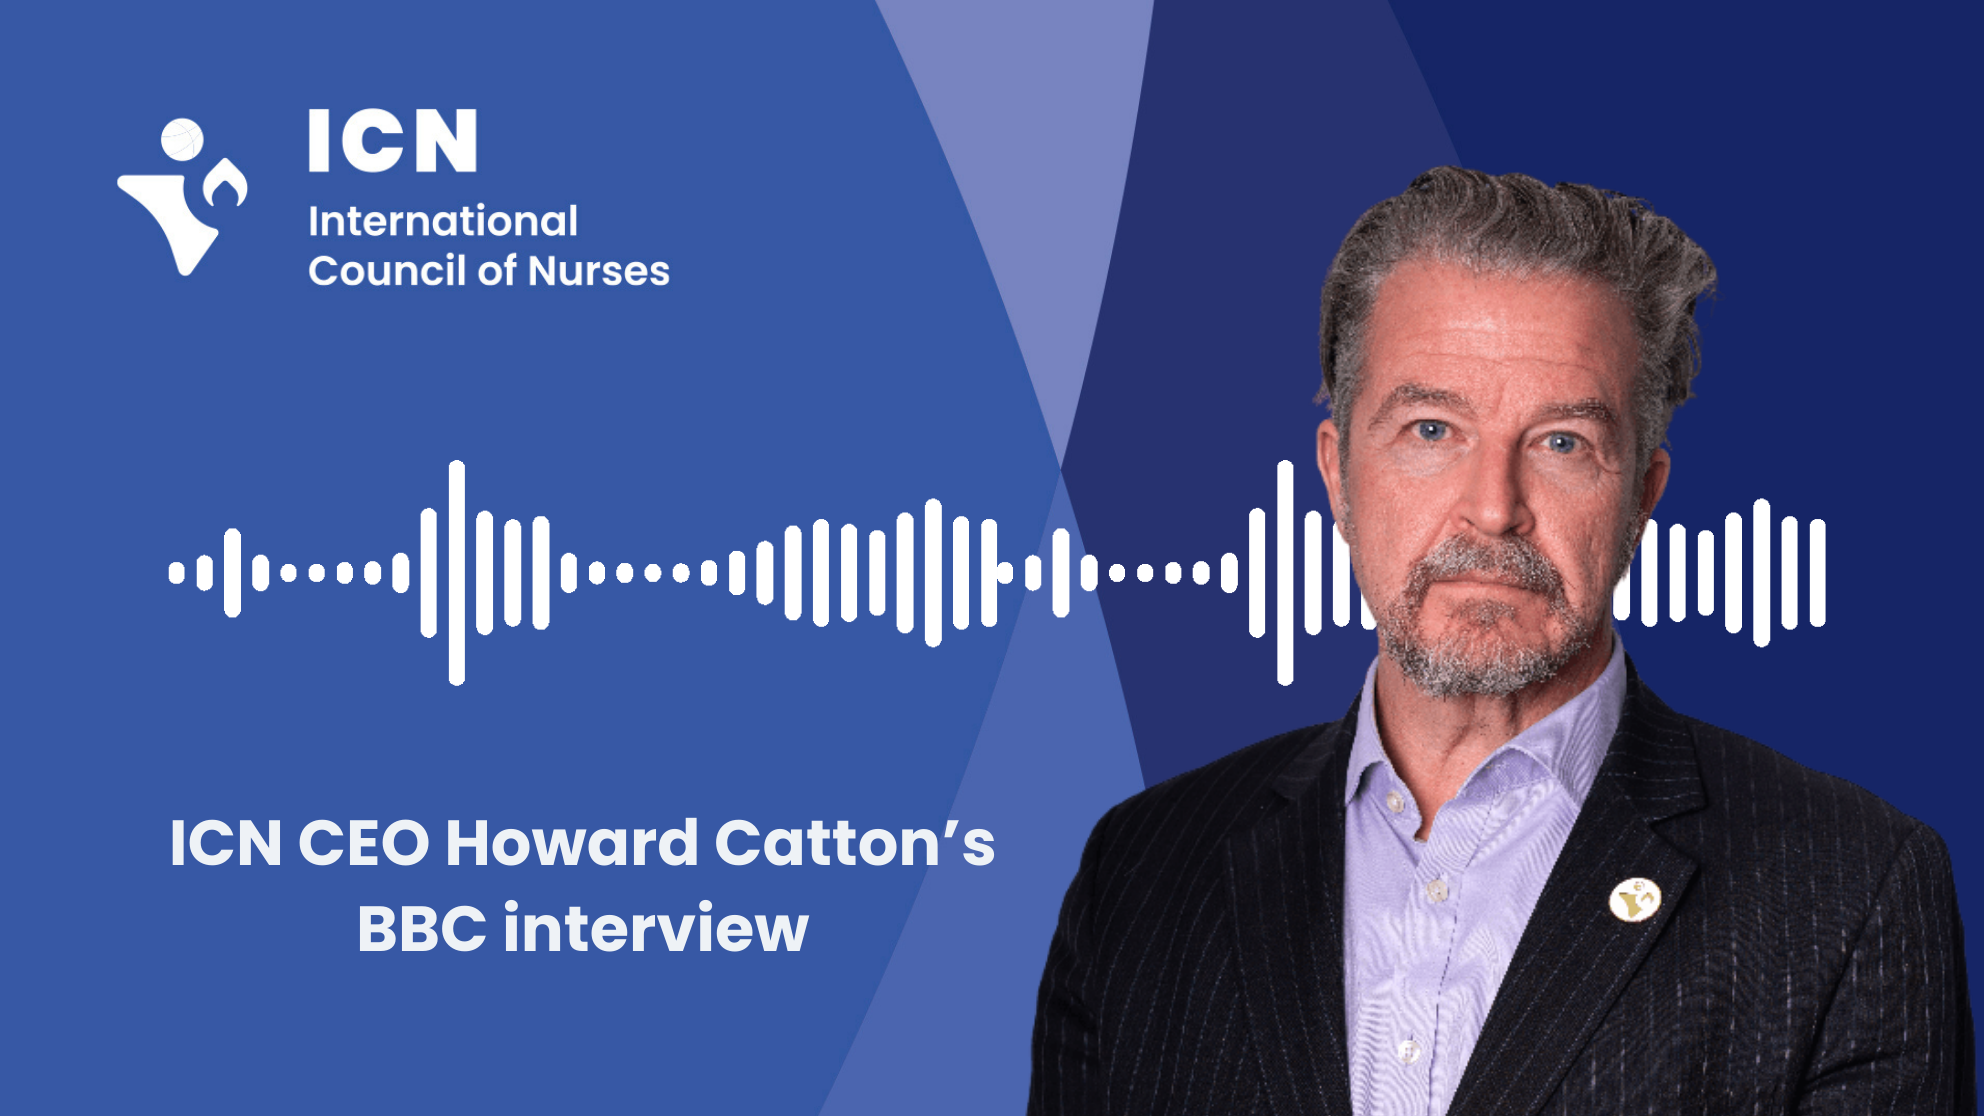 Howard Catton's BBC interview